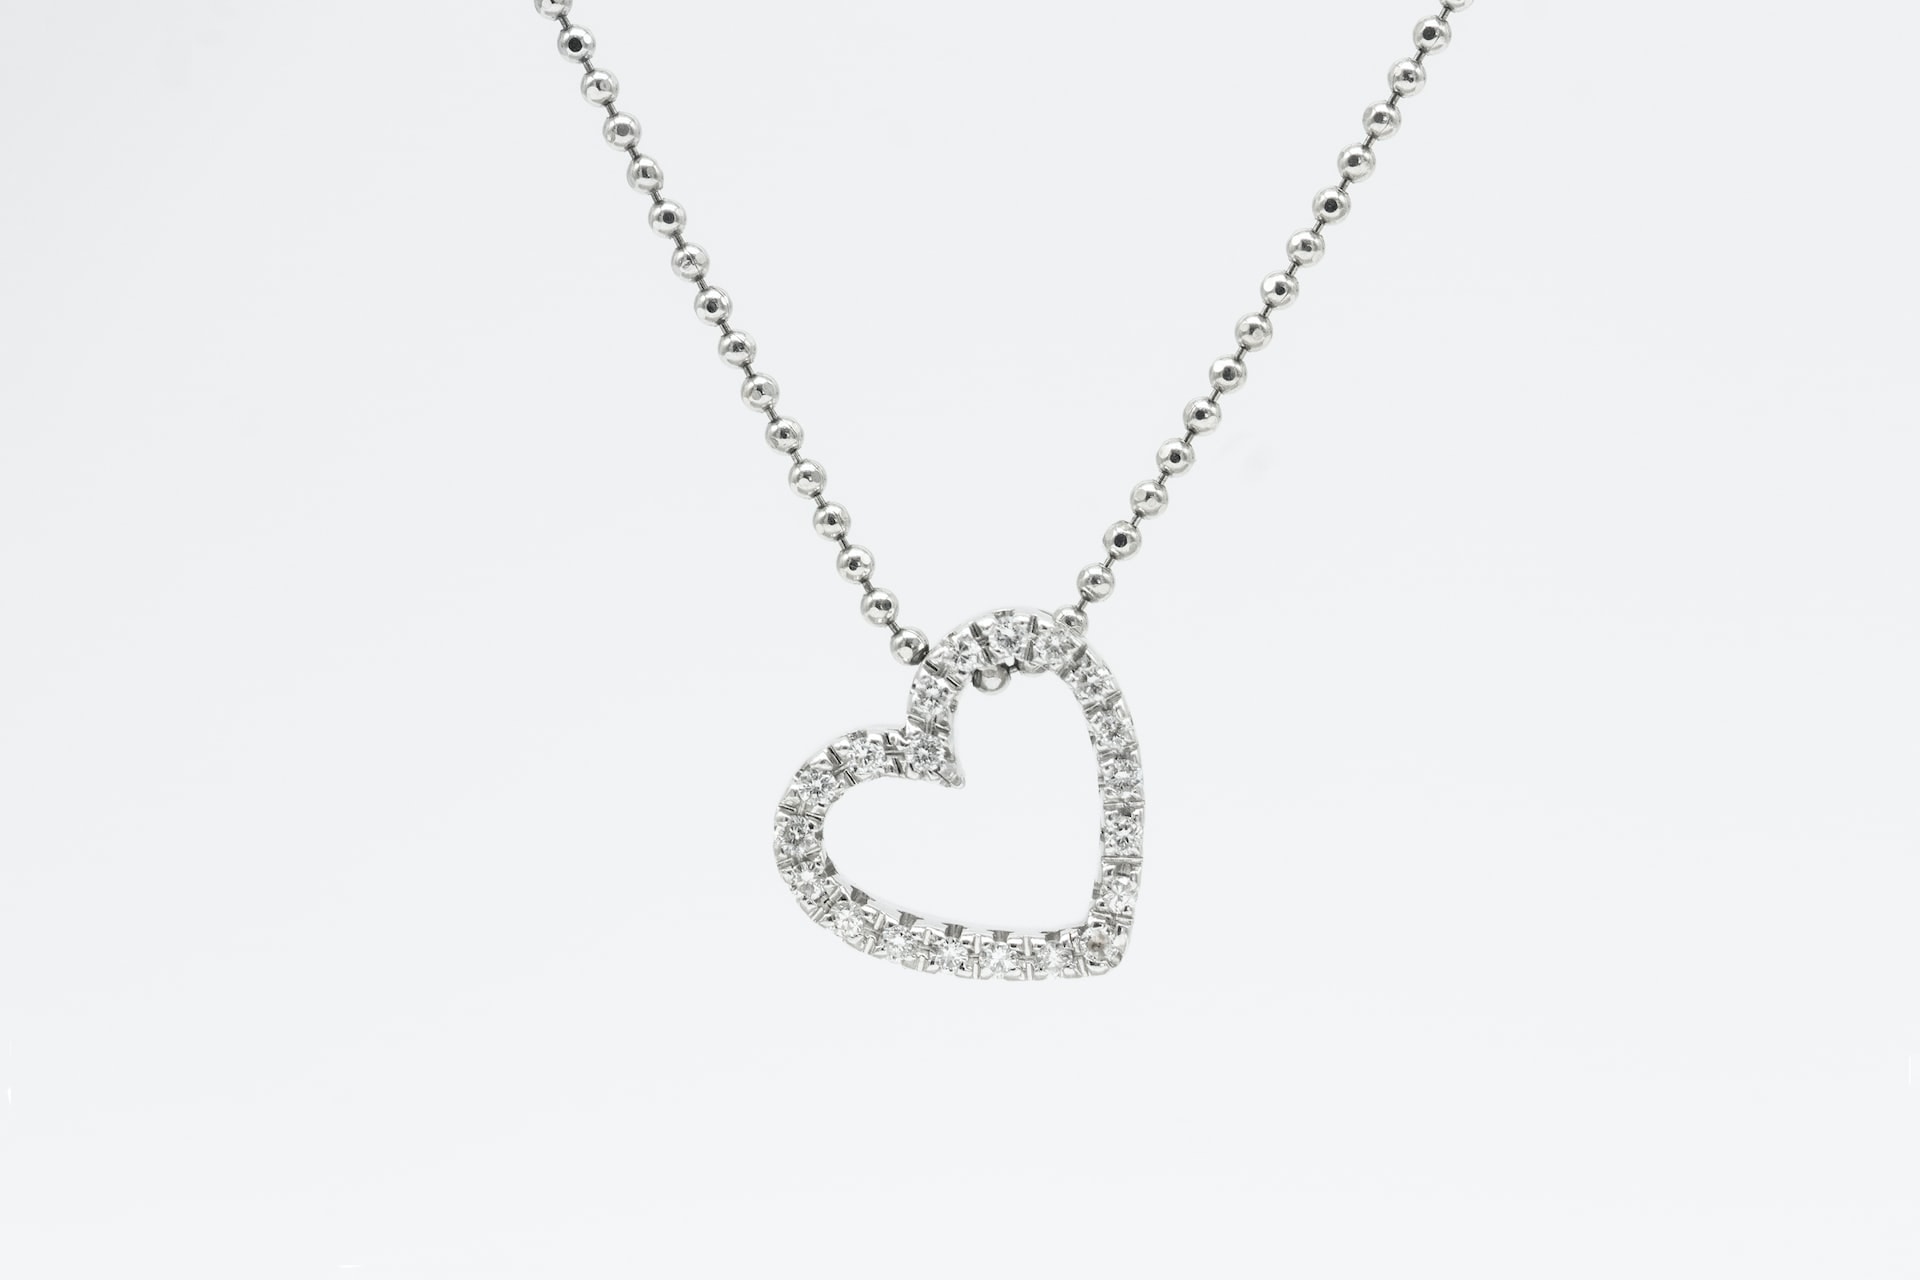 Symbols of Love in Jewelry